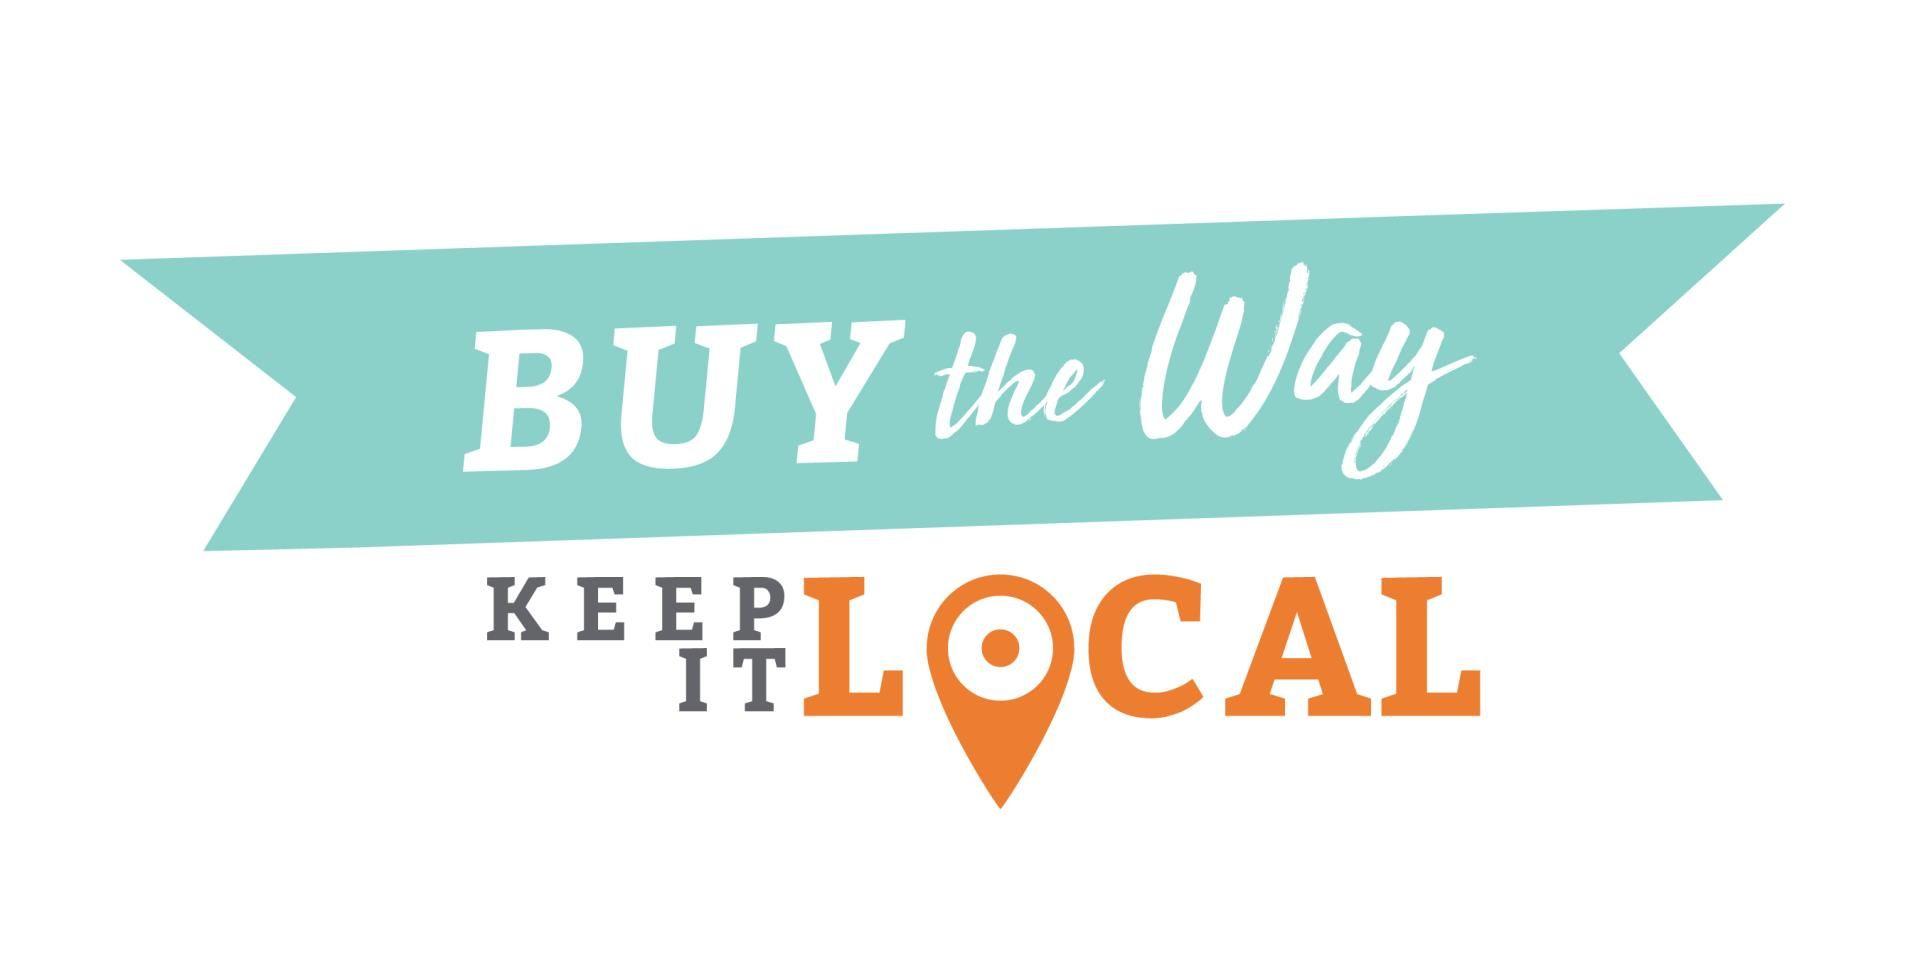 Keep It Local Logo - Buy the Way: Keep it Local | City of Amarillo, TX